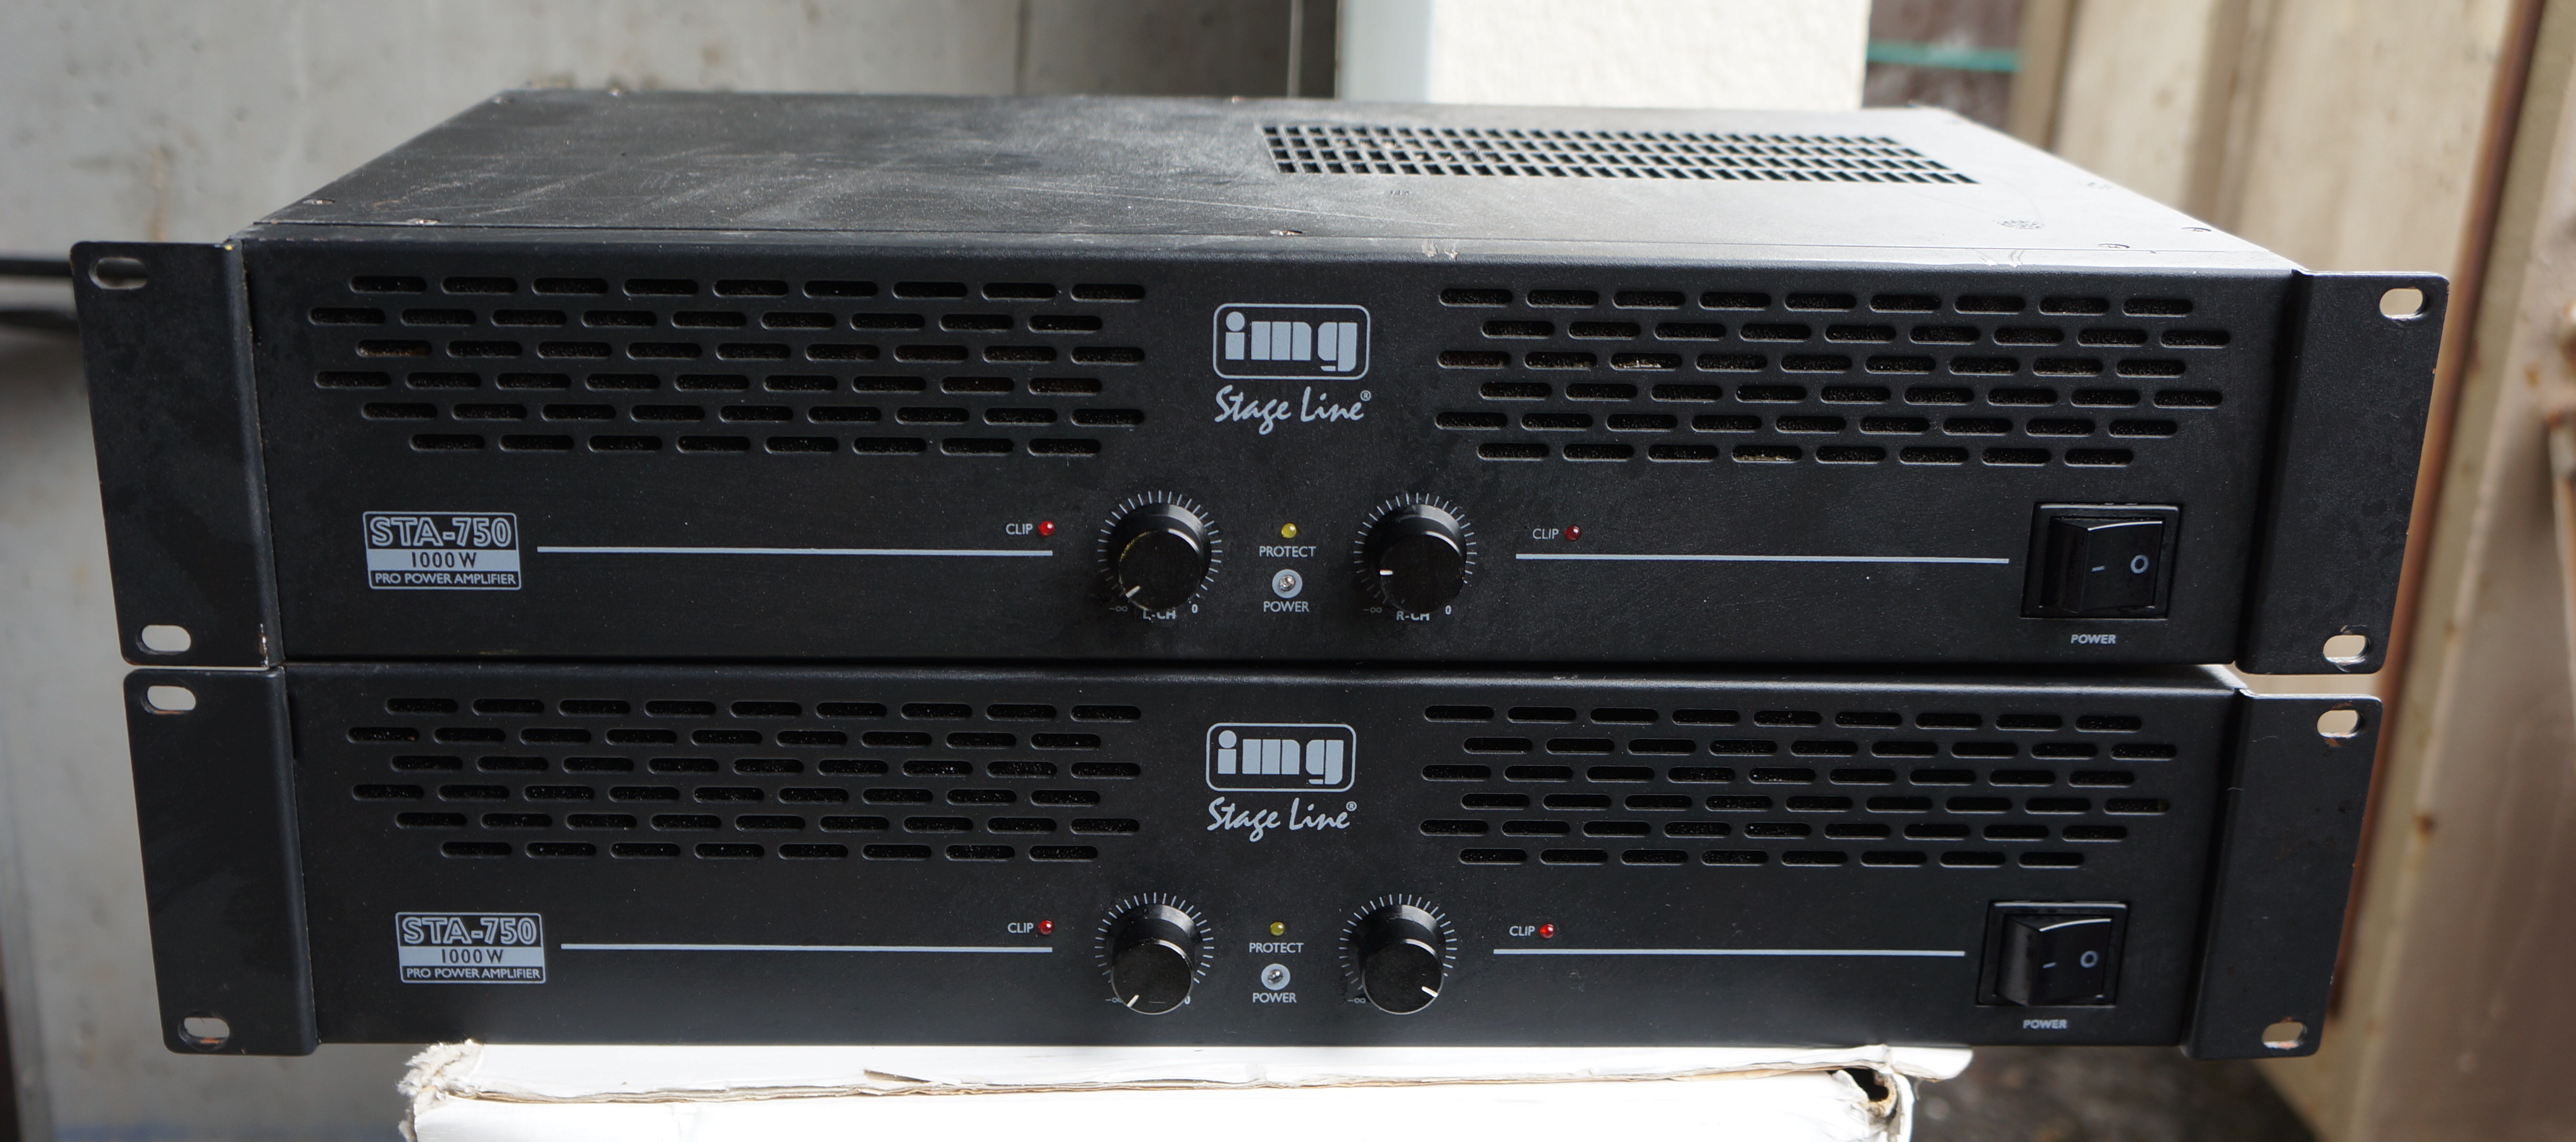 STA-750 - img Stage Line STA-750 - Audiofanzine